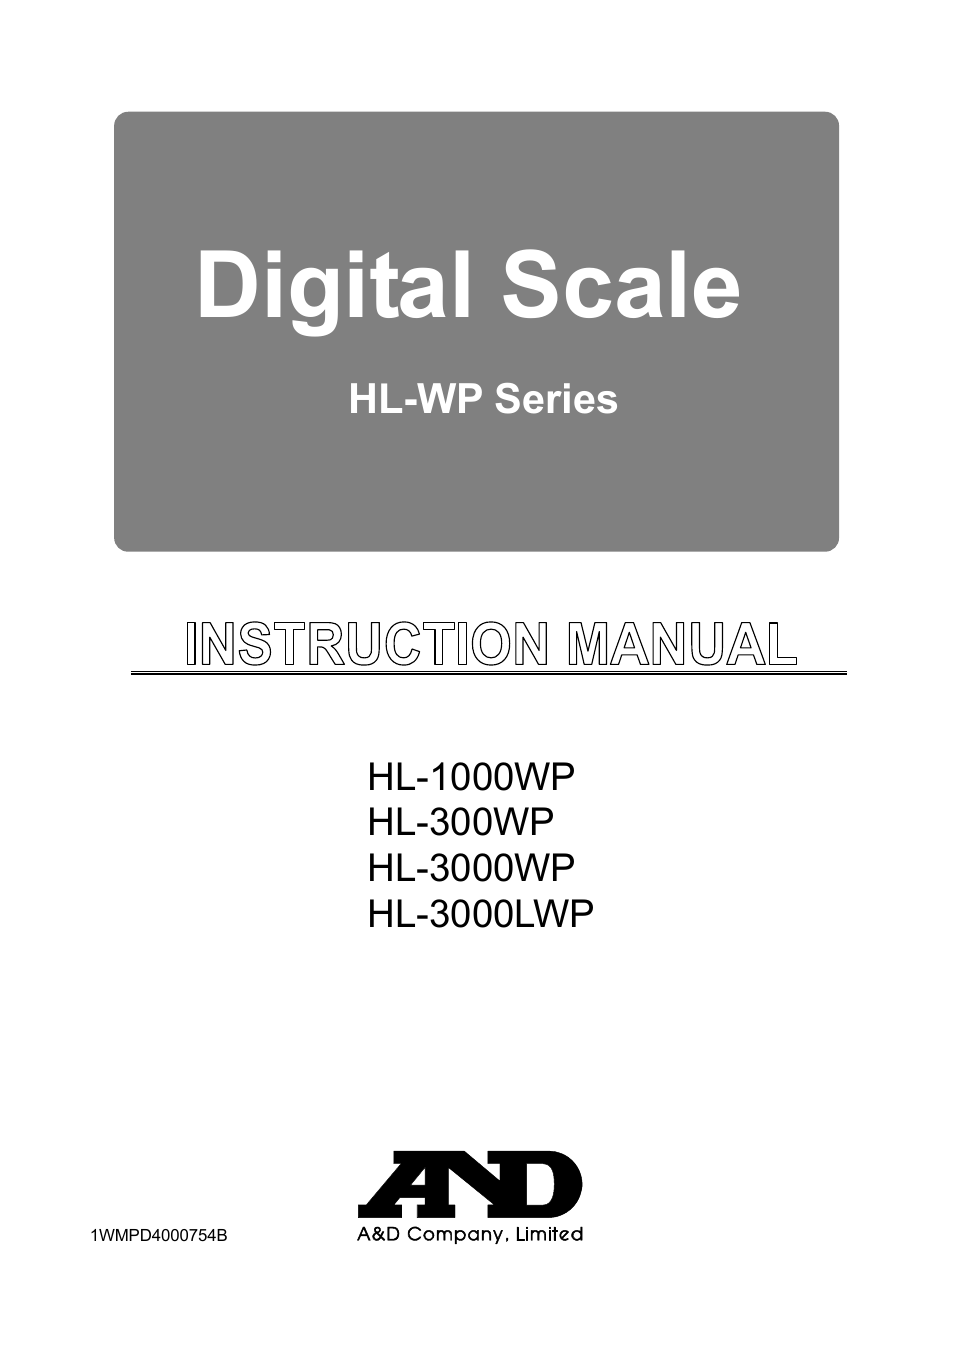 Digital Scale HL-3000WP